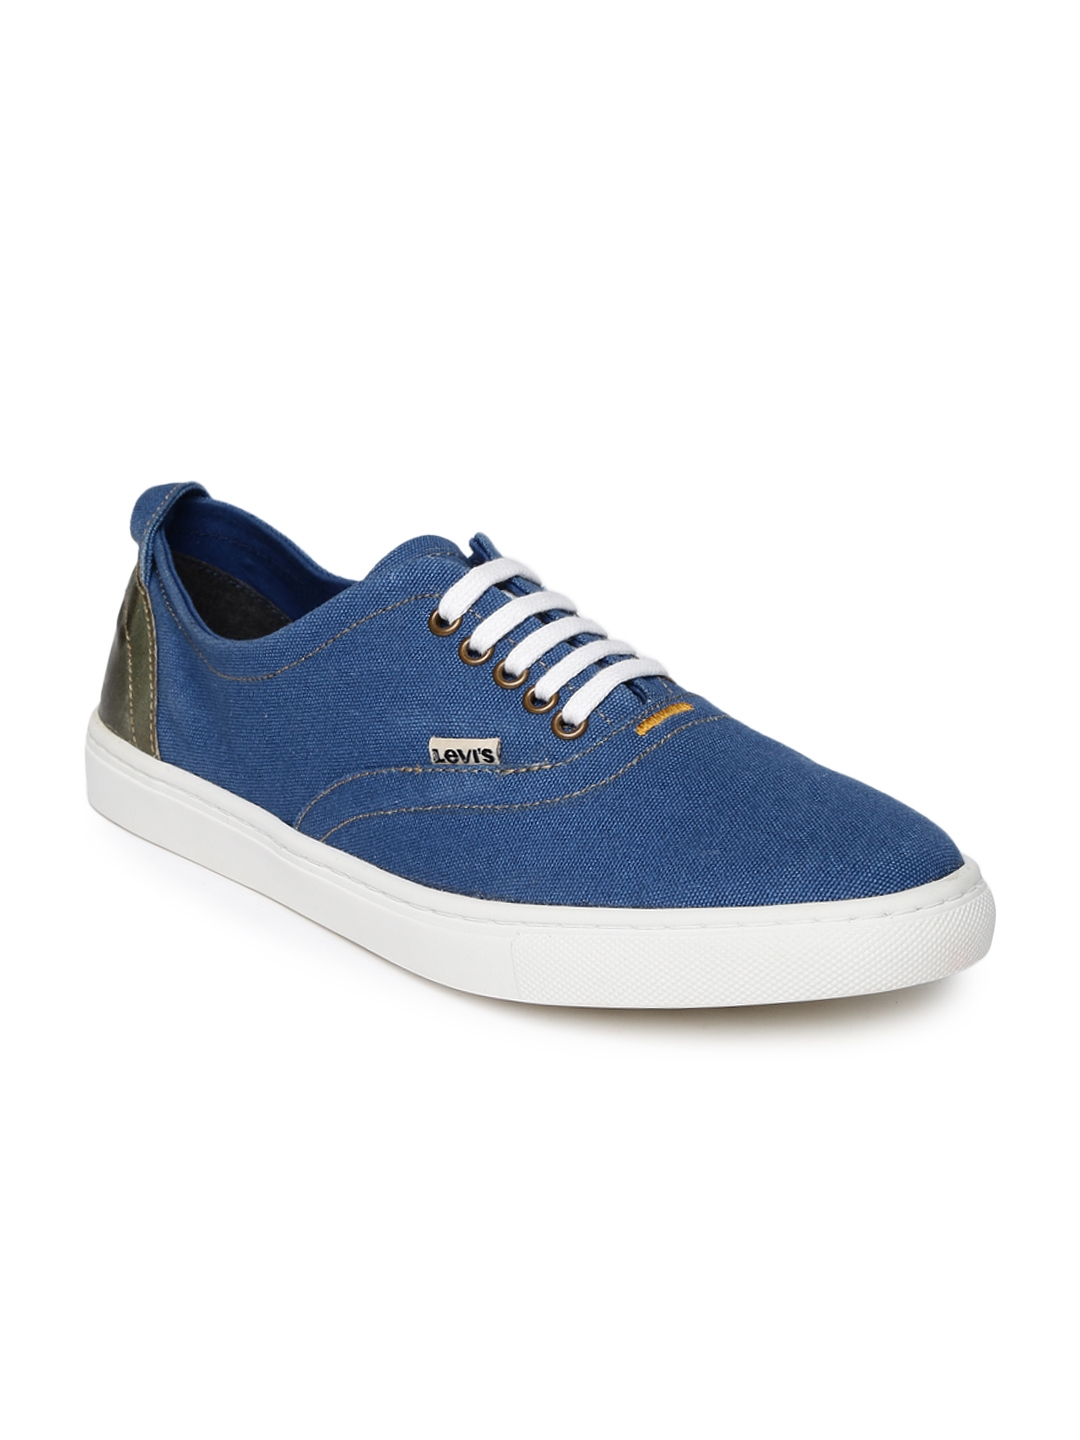 levis blue sneakers